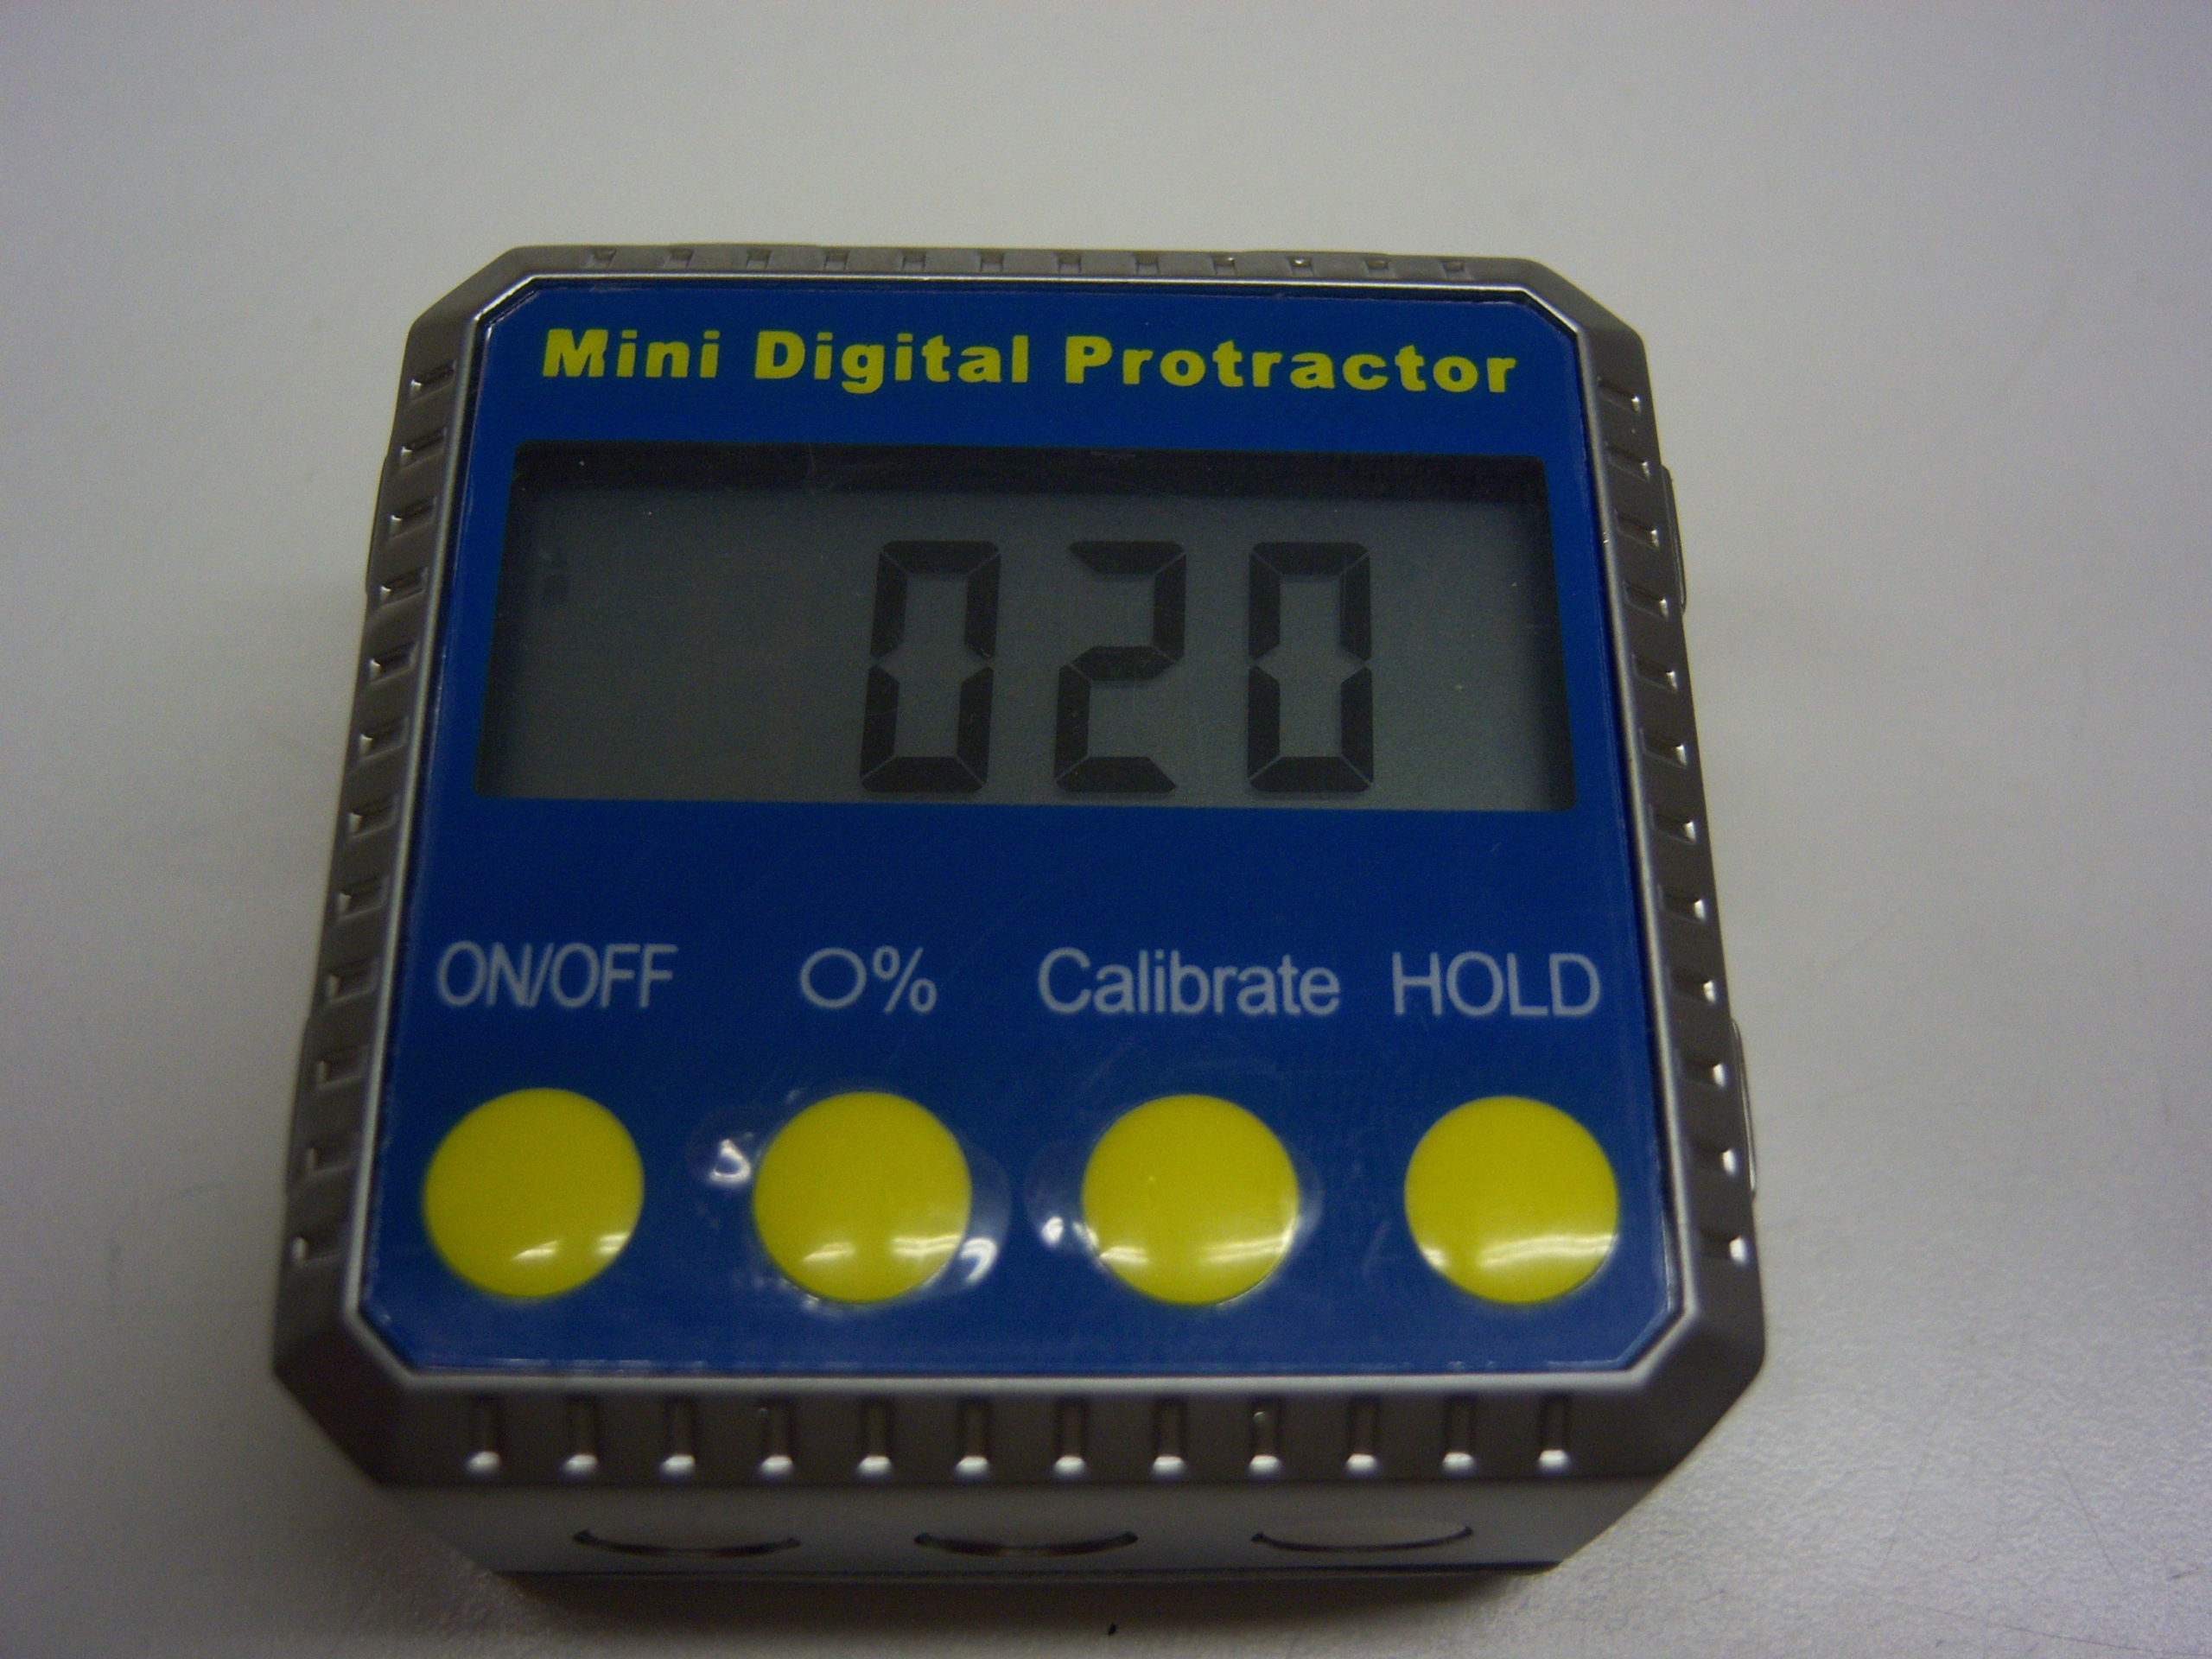 Inclinometro digitale